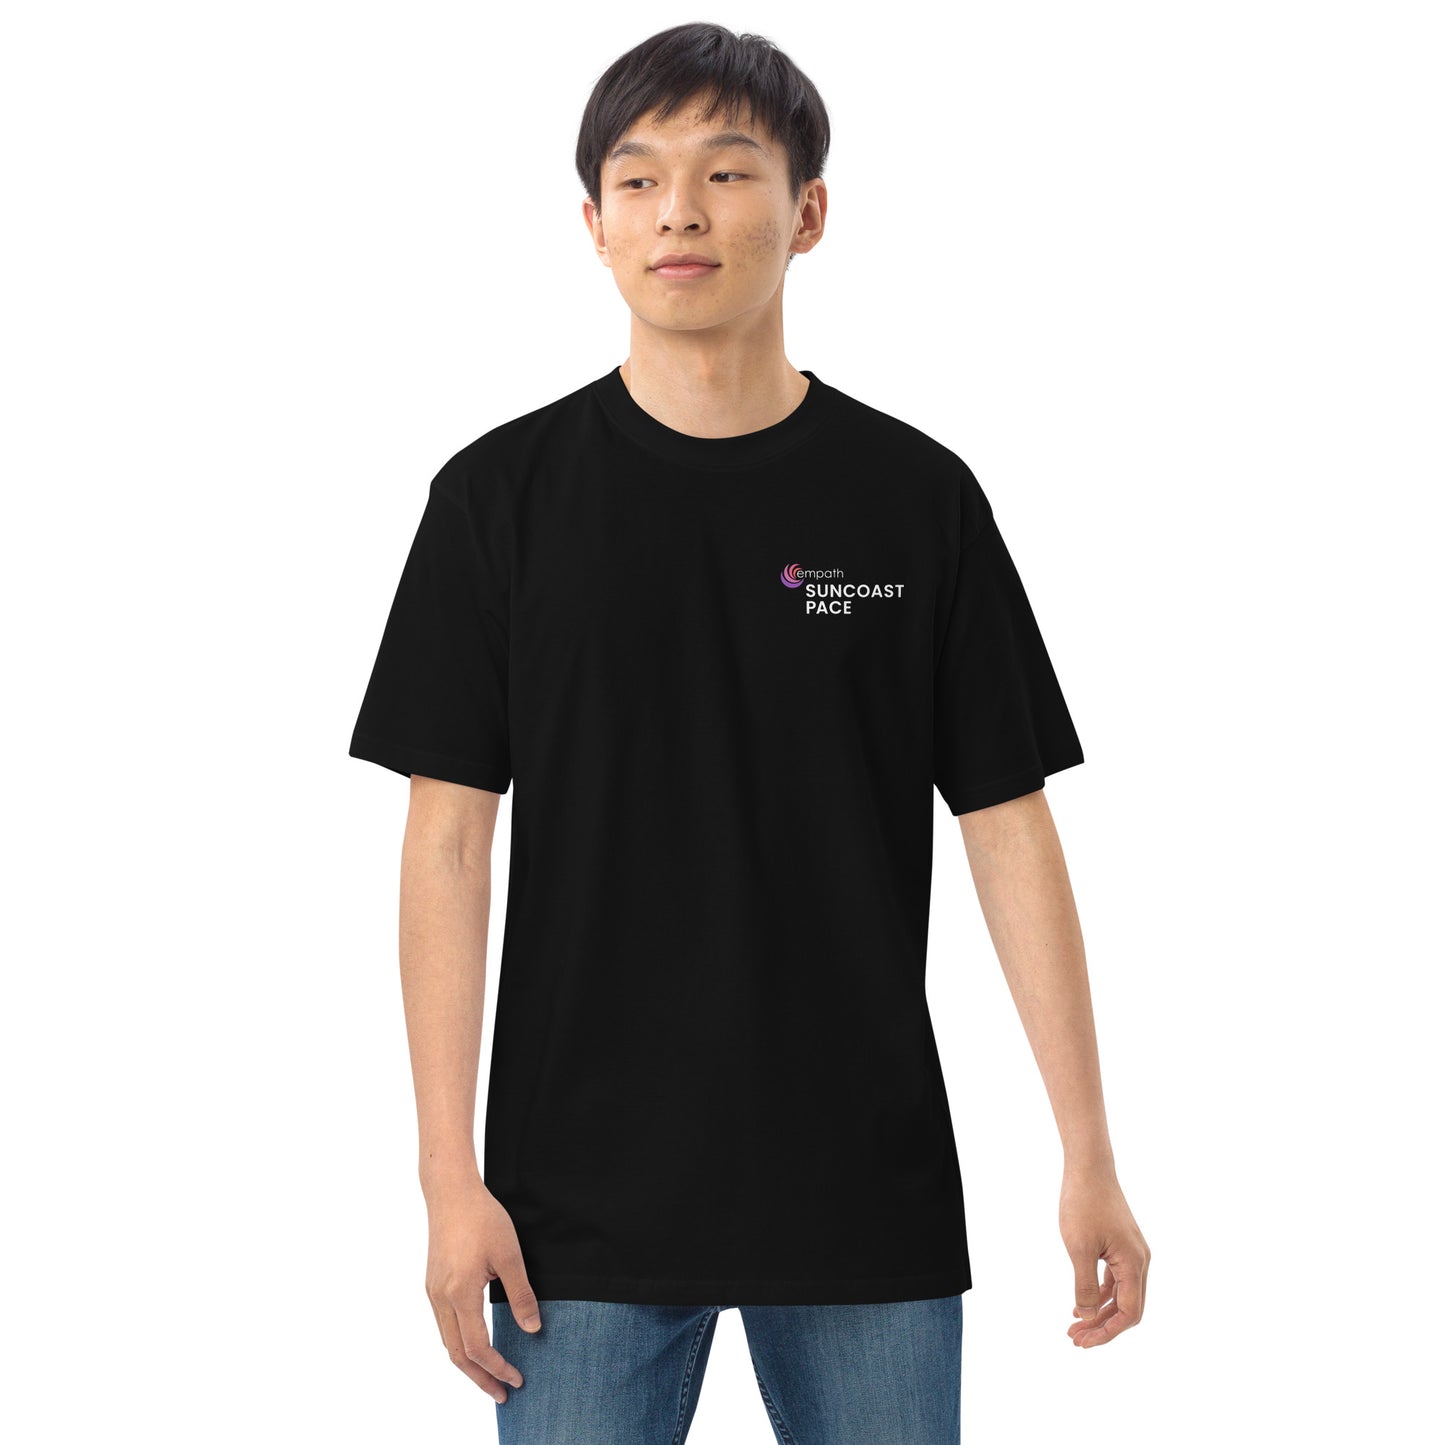 Premium Heavyweight T-shirt - Suncoast PACE